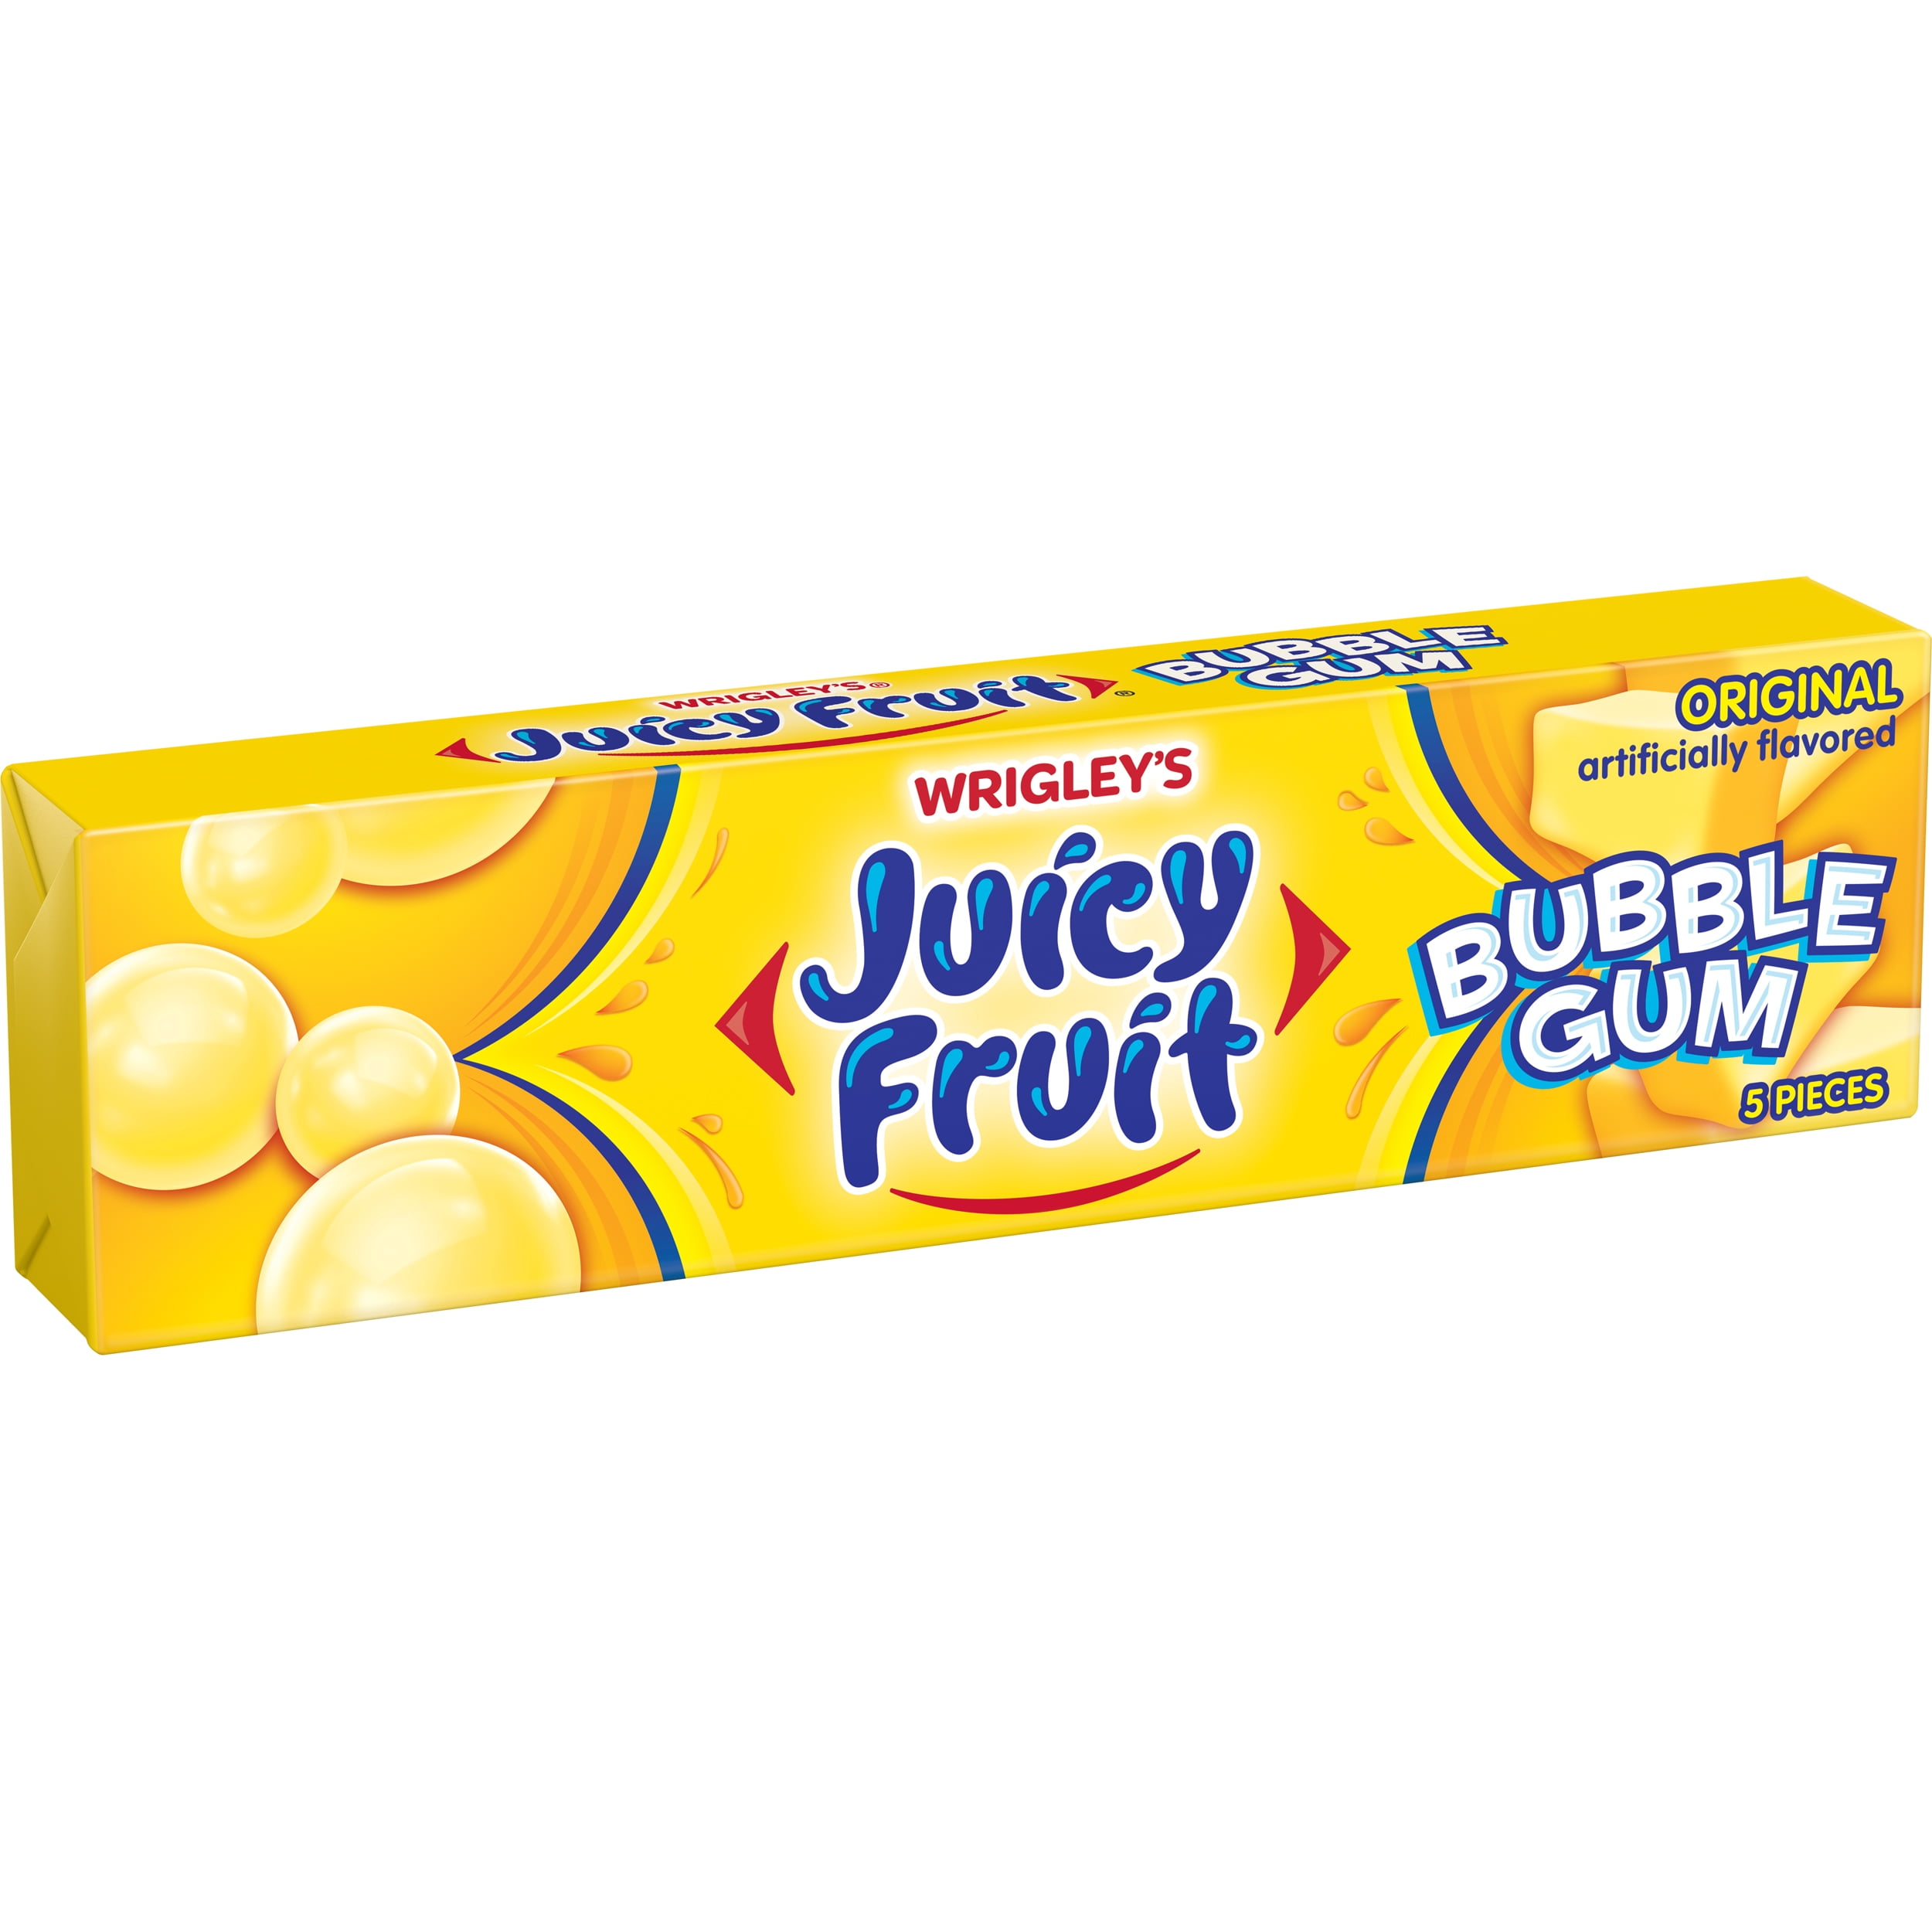 Juicy Fruit Gum Unwrapped.